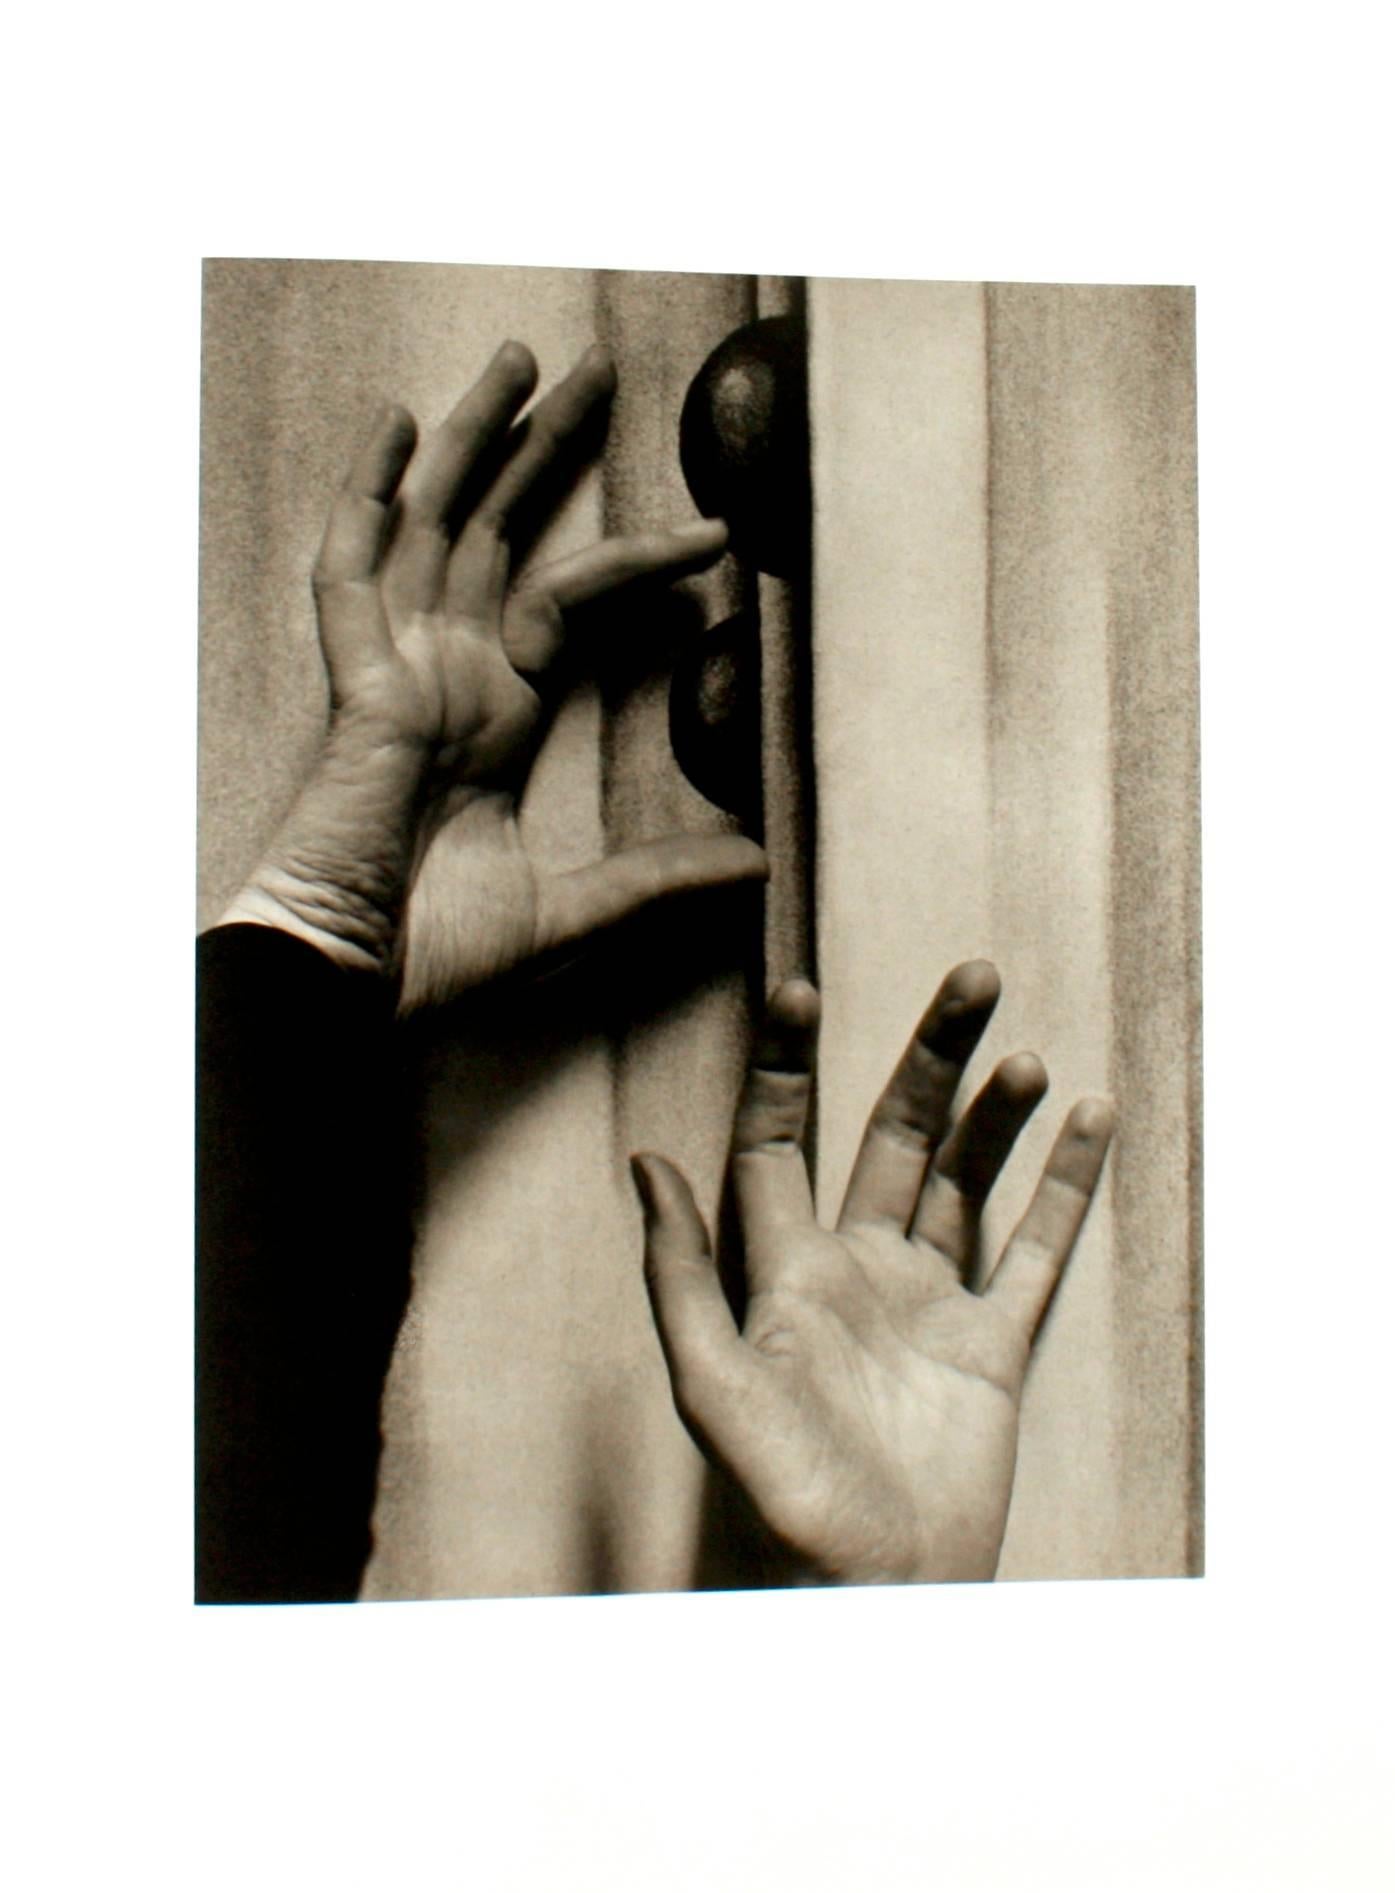 Paper “Georgia O'Keeffe” A Portrait by Alfred Stieglitz and Georgia O'Keeffe